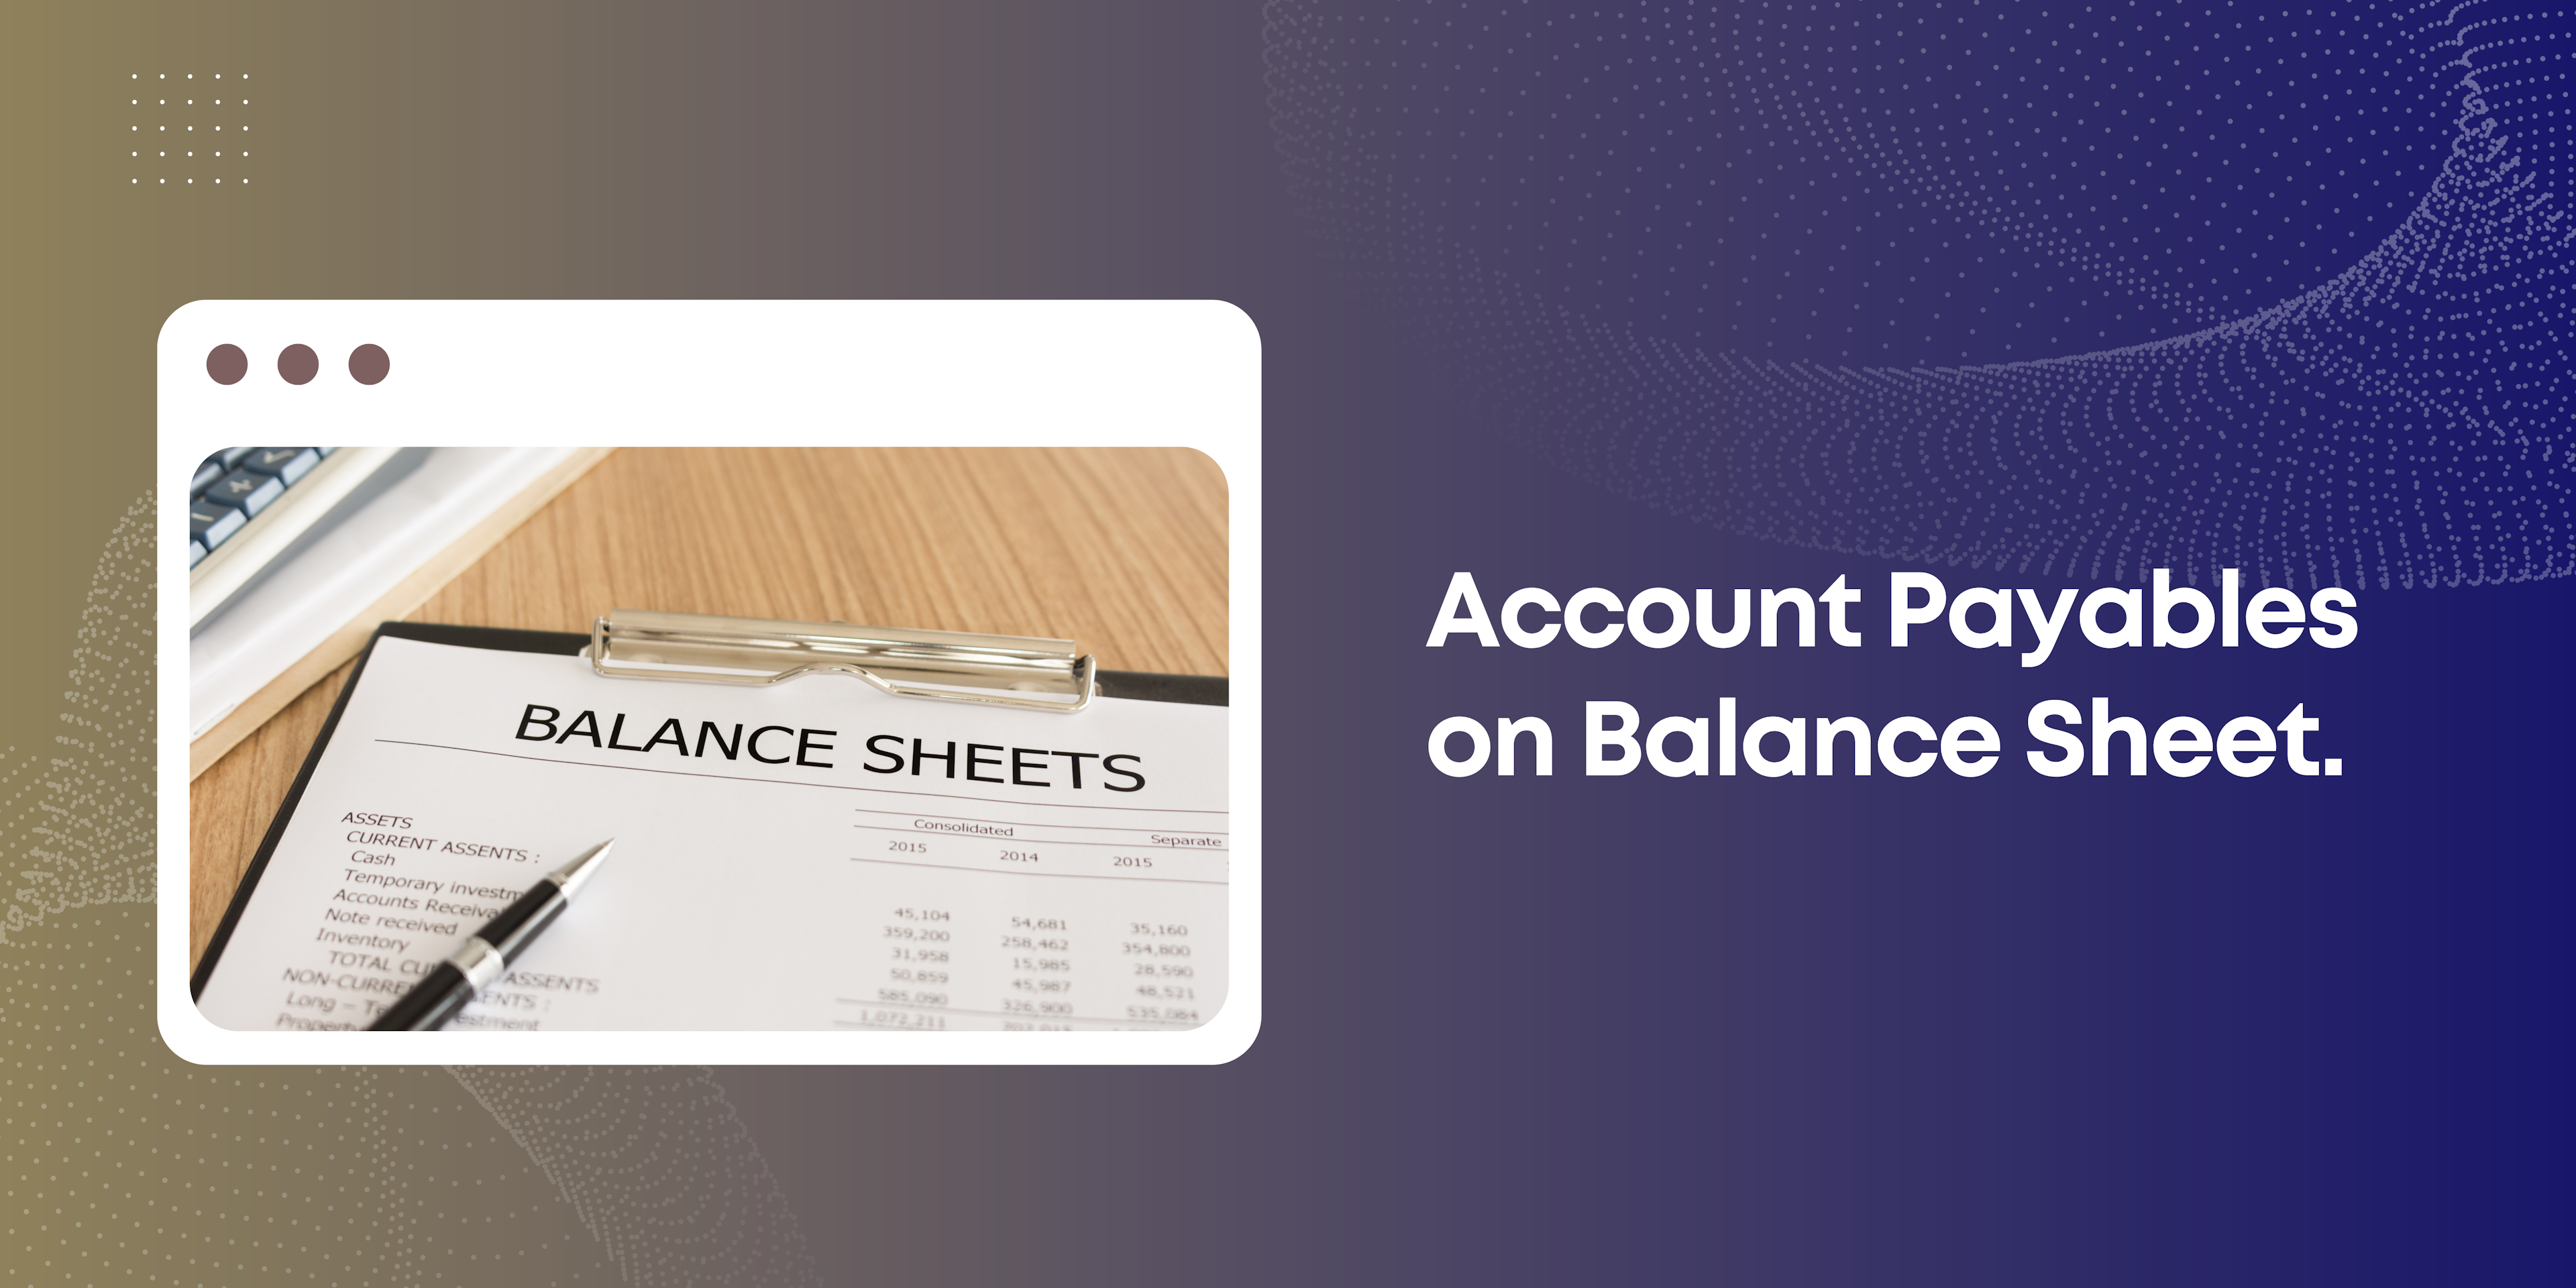 Accounts Payable on a Balance Sheet